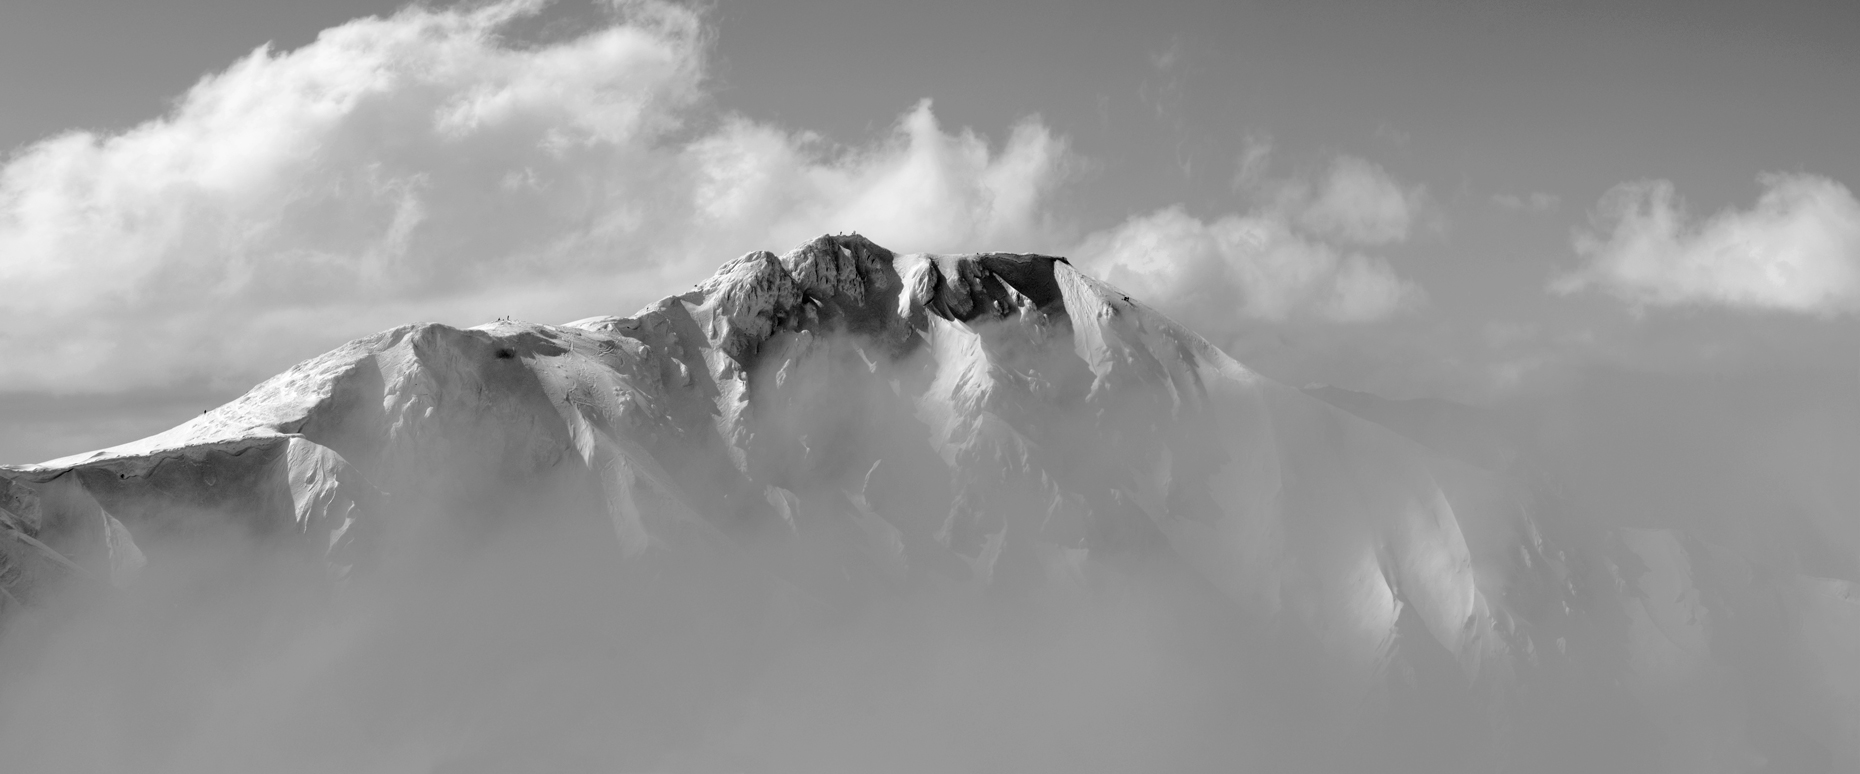 Jon Wyatt Photography - Snowy ridge with mist, Jasna, Slovakia 